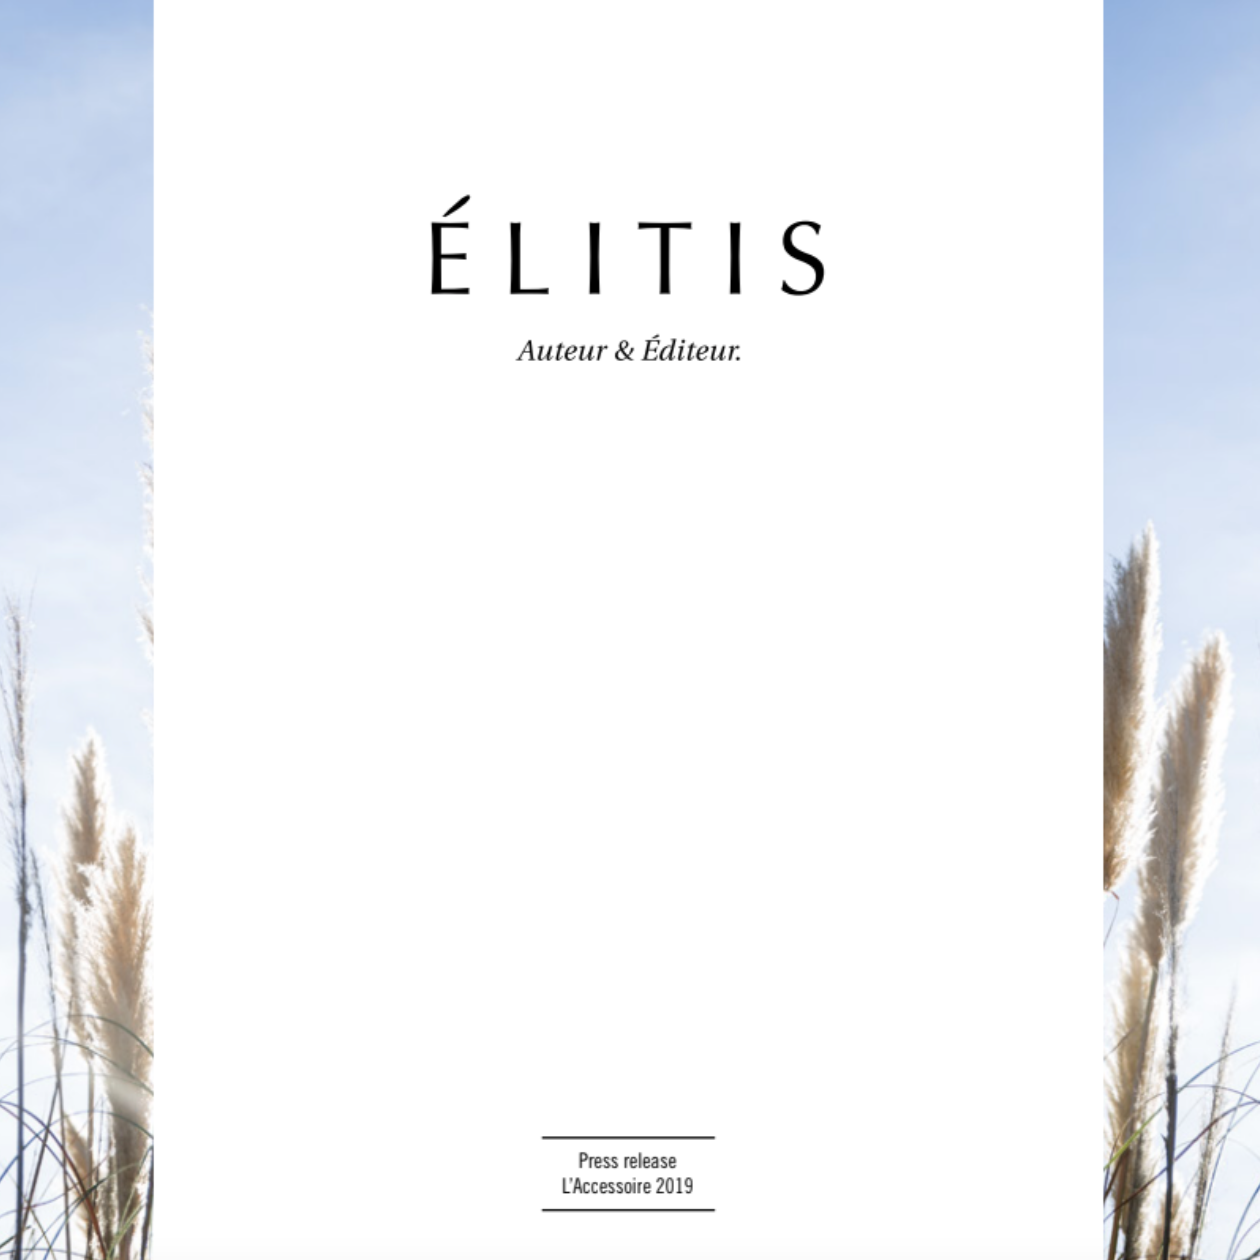 Katalóg bytových textílií a látok značky Élitis